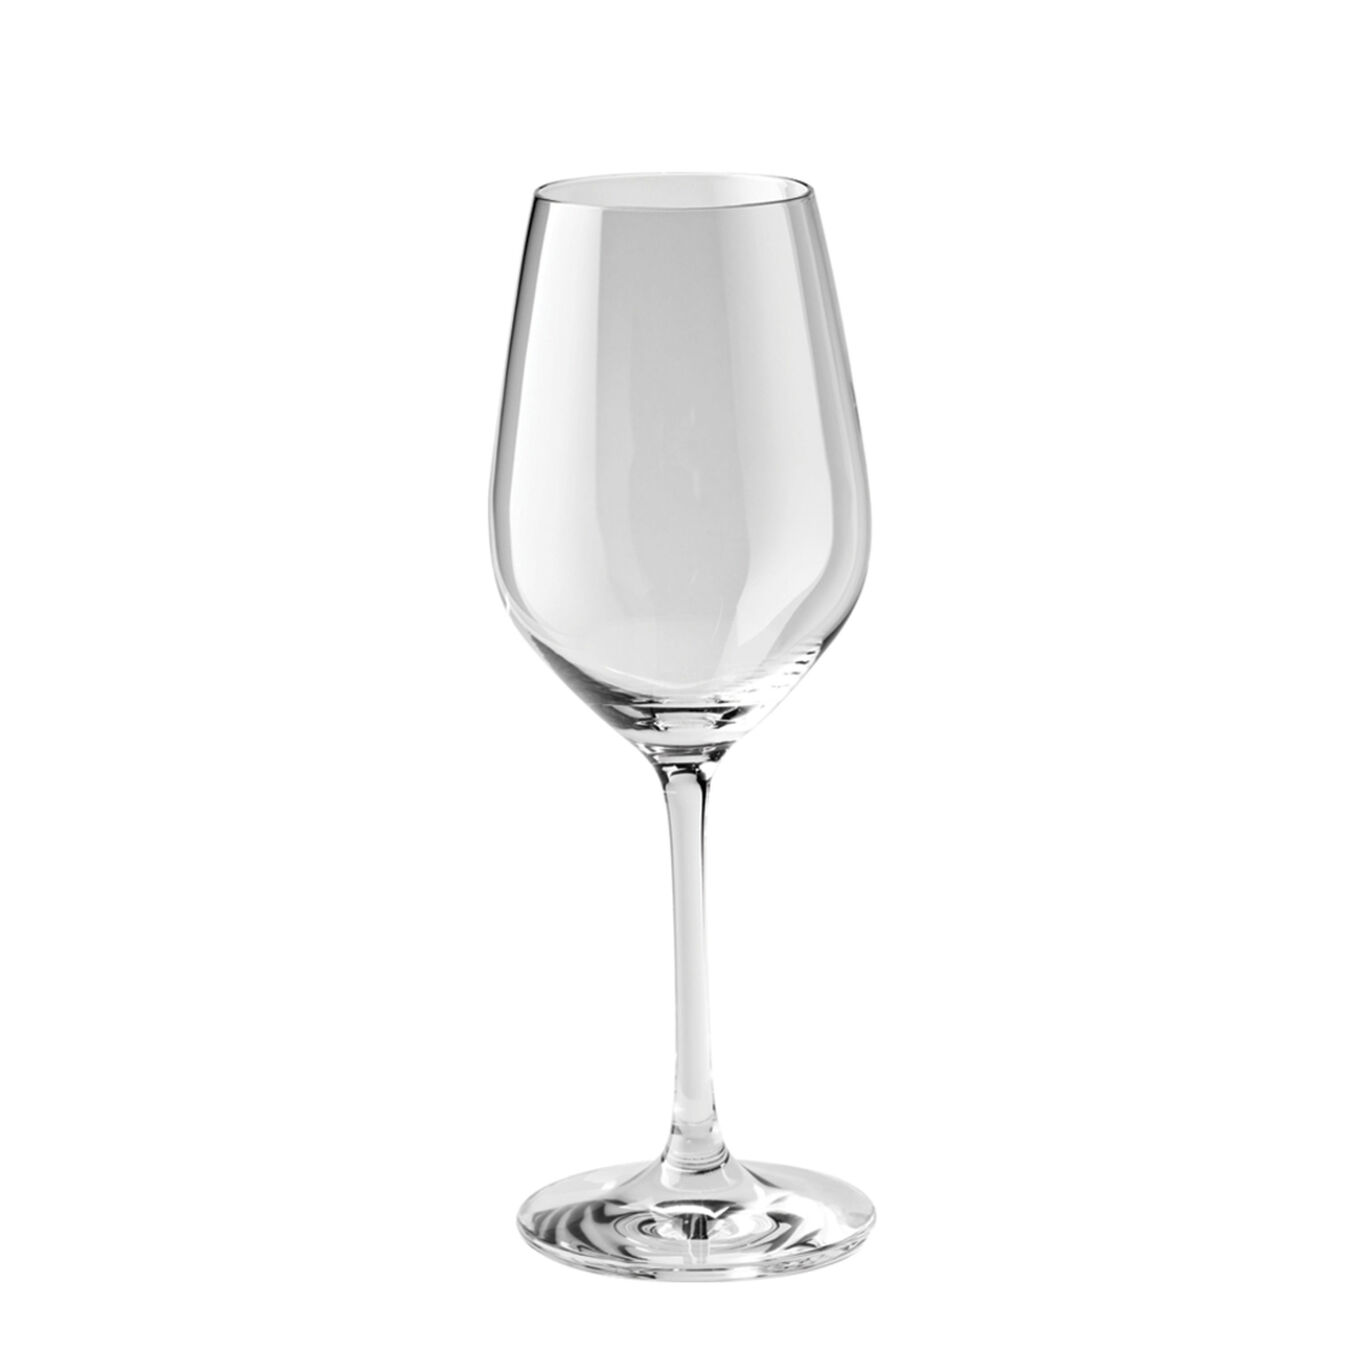 White wine glass set 6 Piece,,large 1